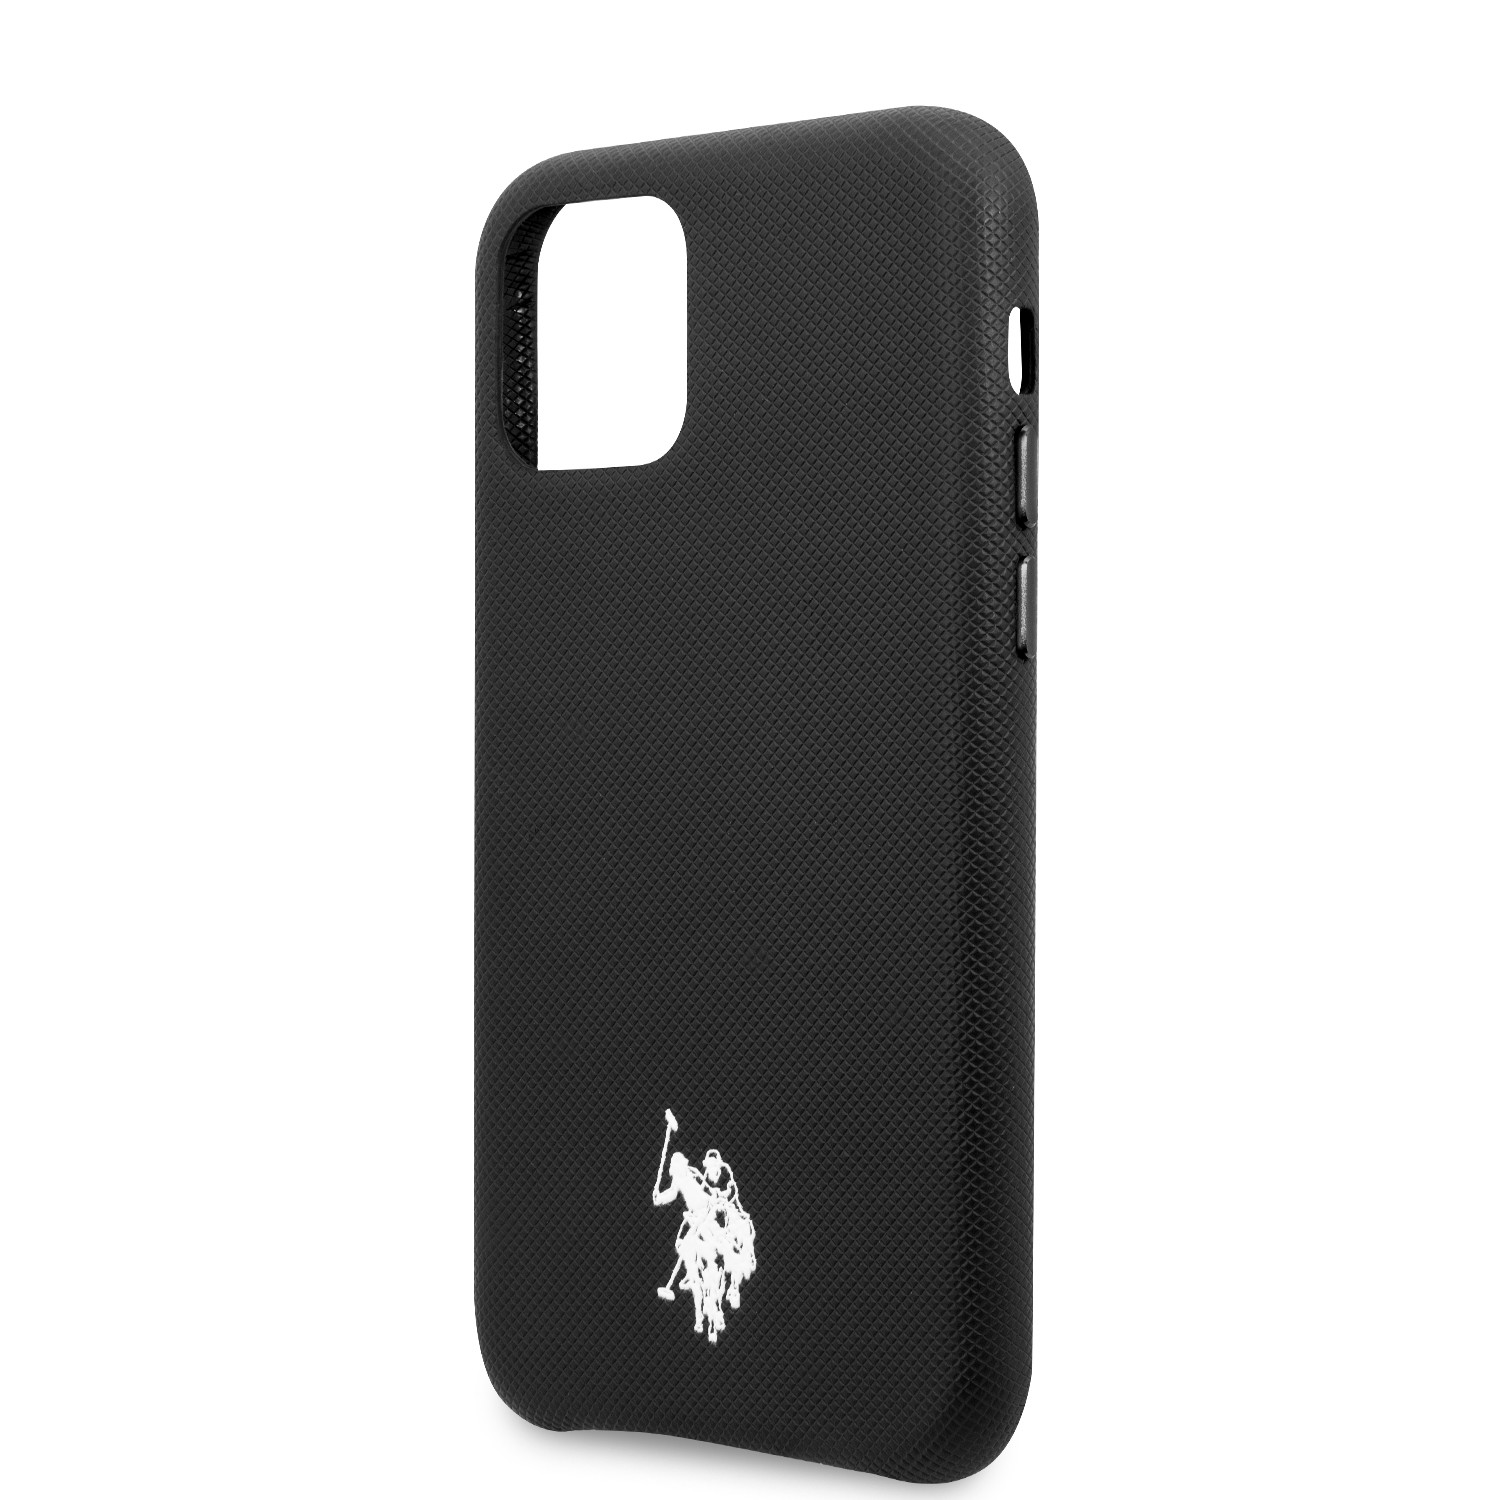 Husa Cover US Polo TPU Wrapped pentru iPhone 11 Pro Negru thumb